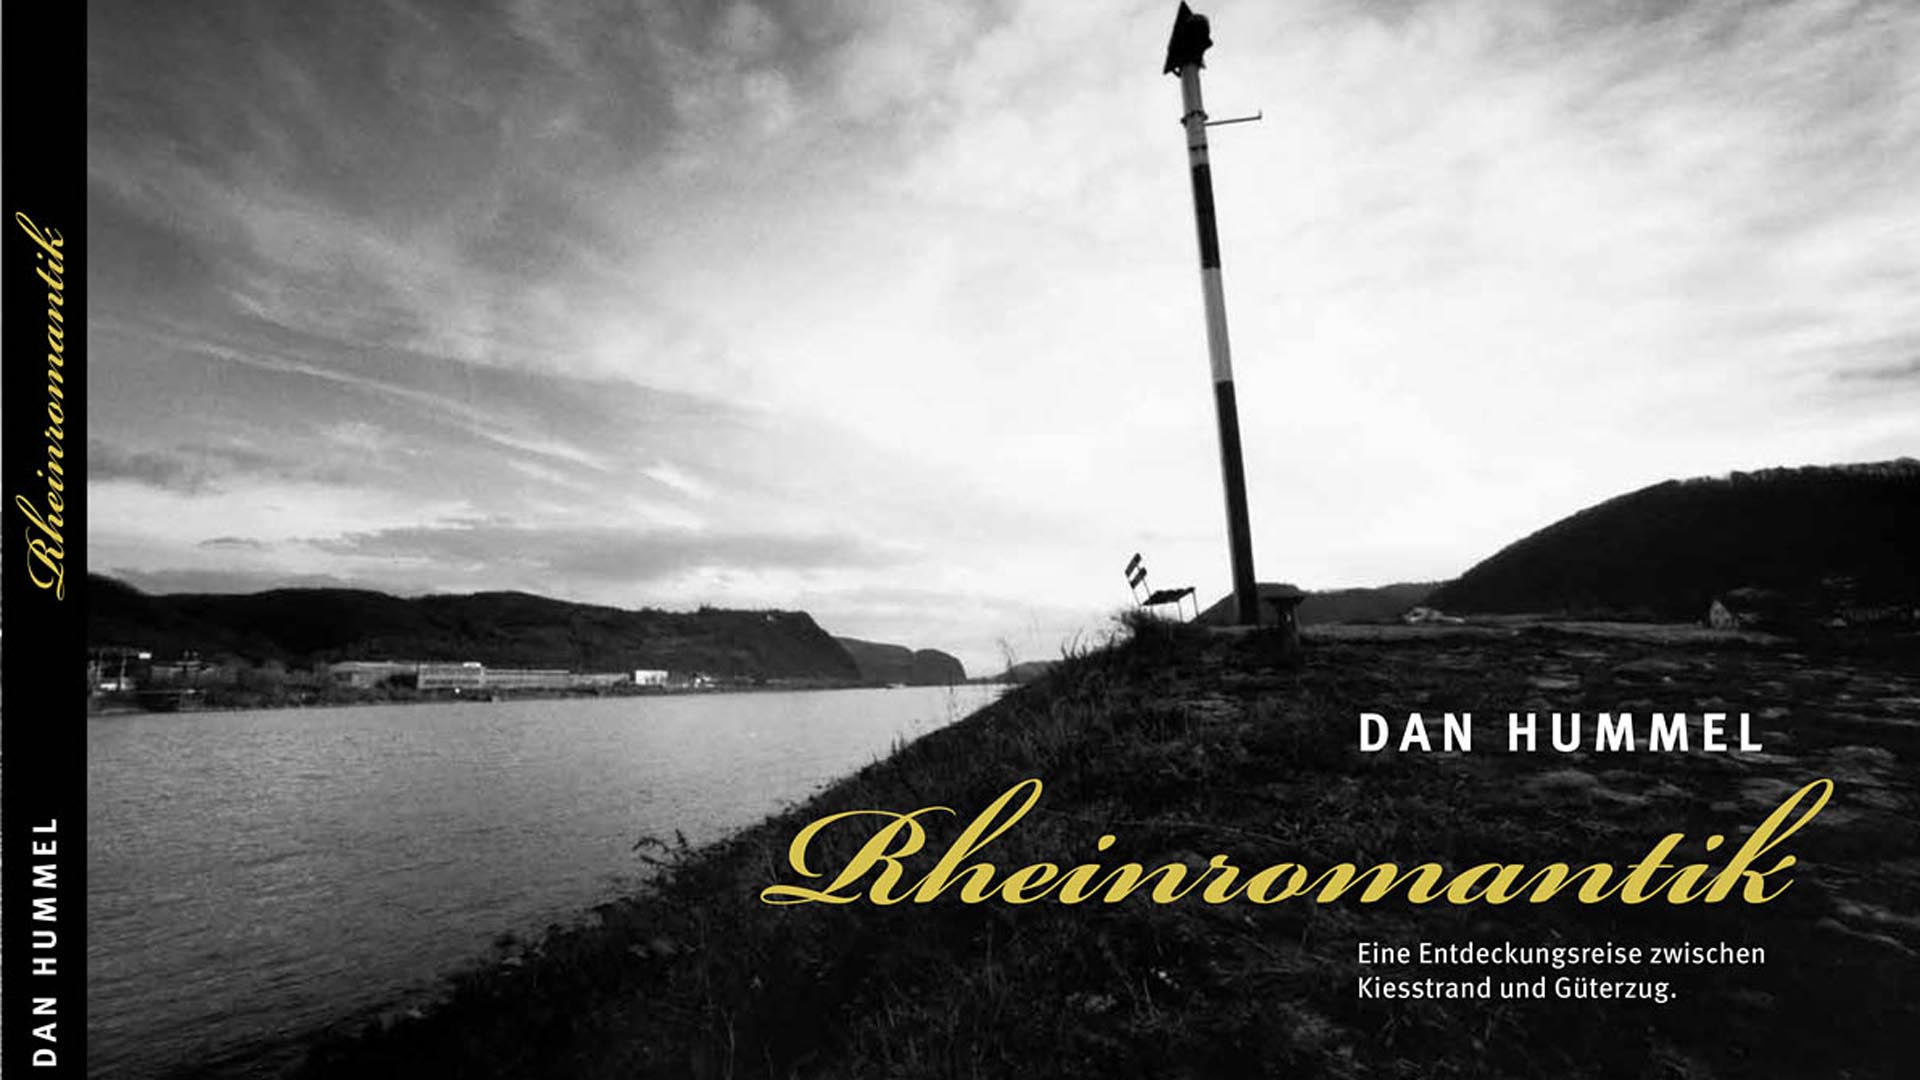 Titel Fotobuch Rheinromantik von Dan Hummel